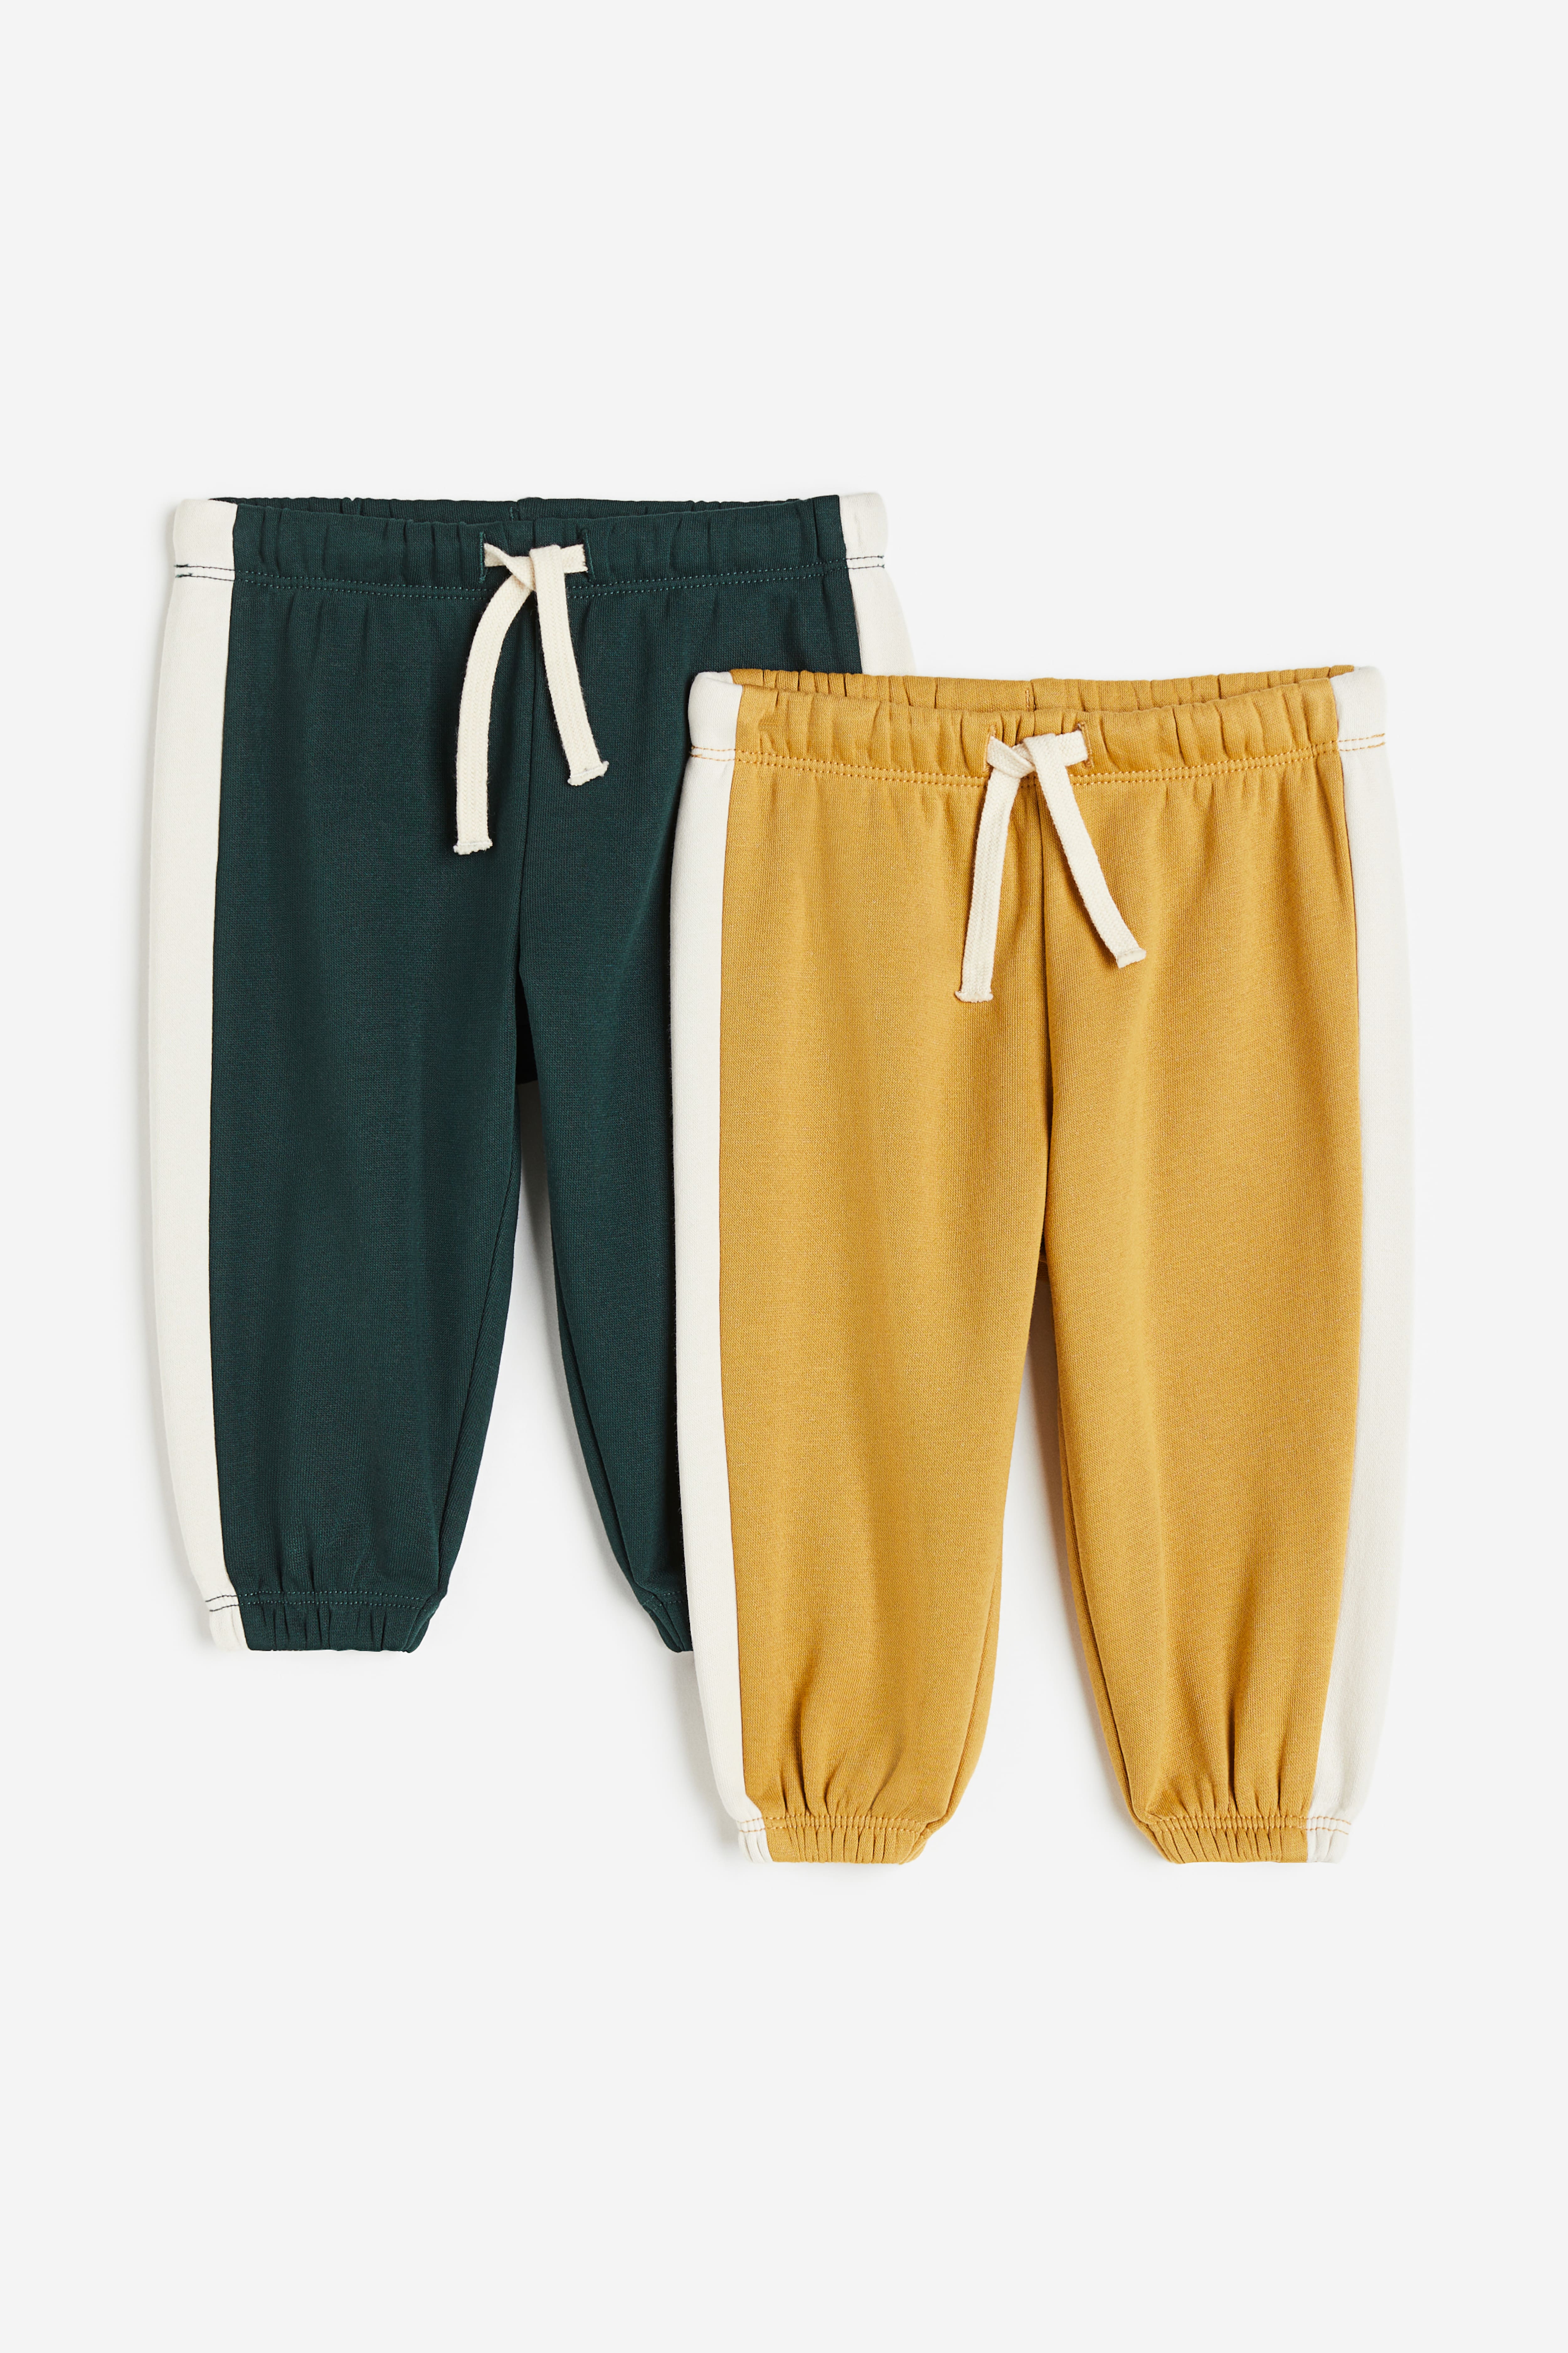 Shop Online Trendy Yellow Pyjama Pants for Boys